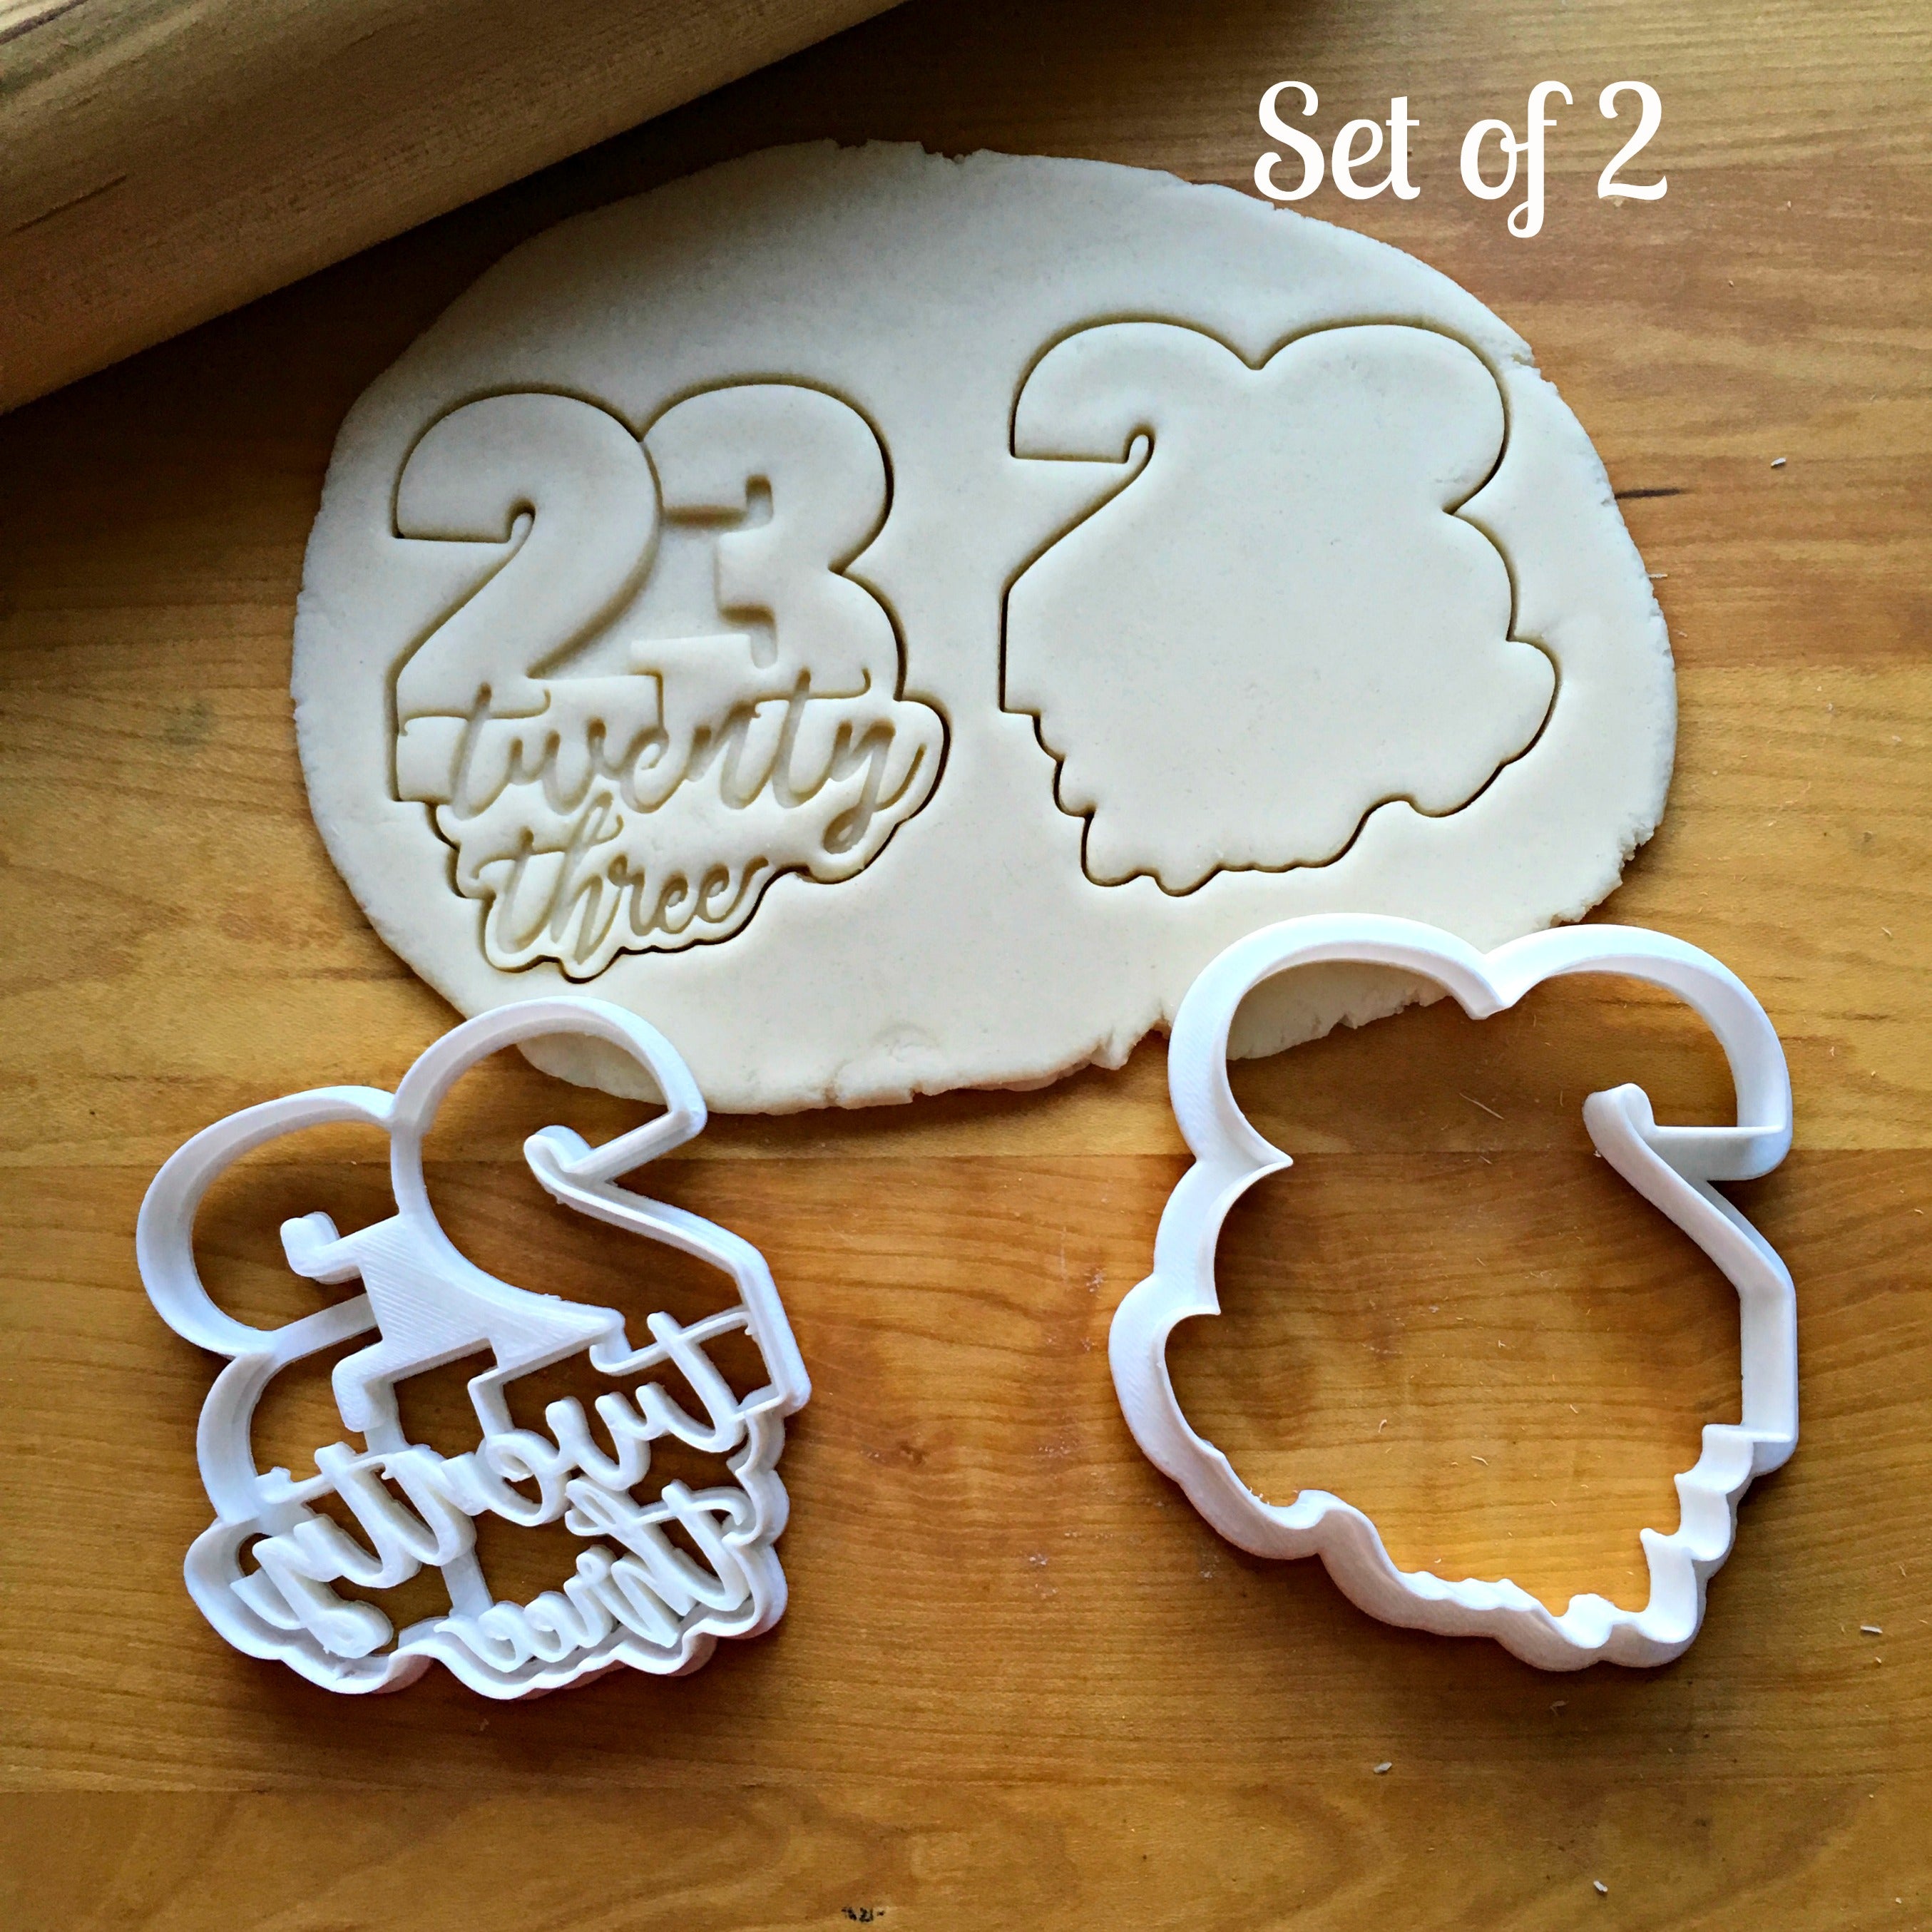 Set of 2 Lettered Number 23 Cookie Cutters/Dishwasher Safe